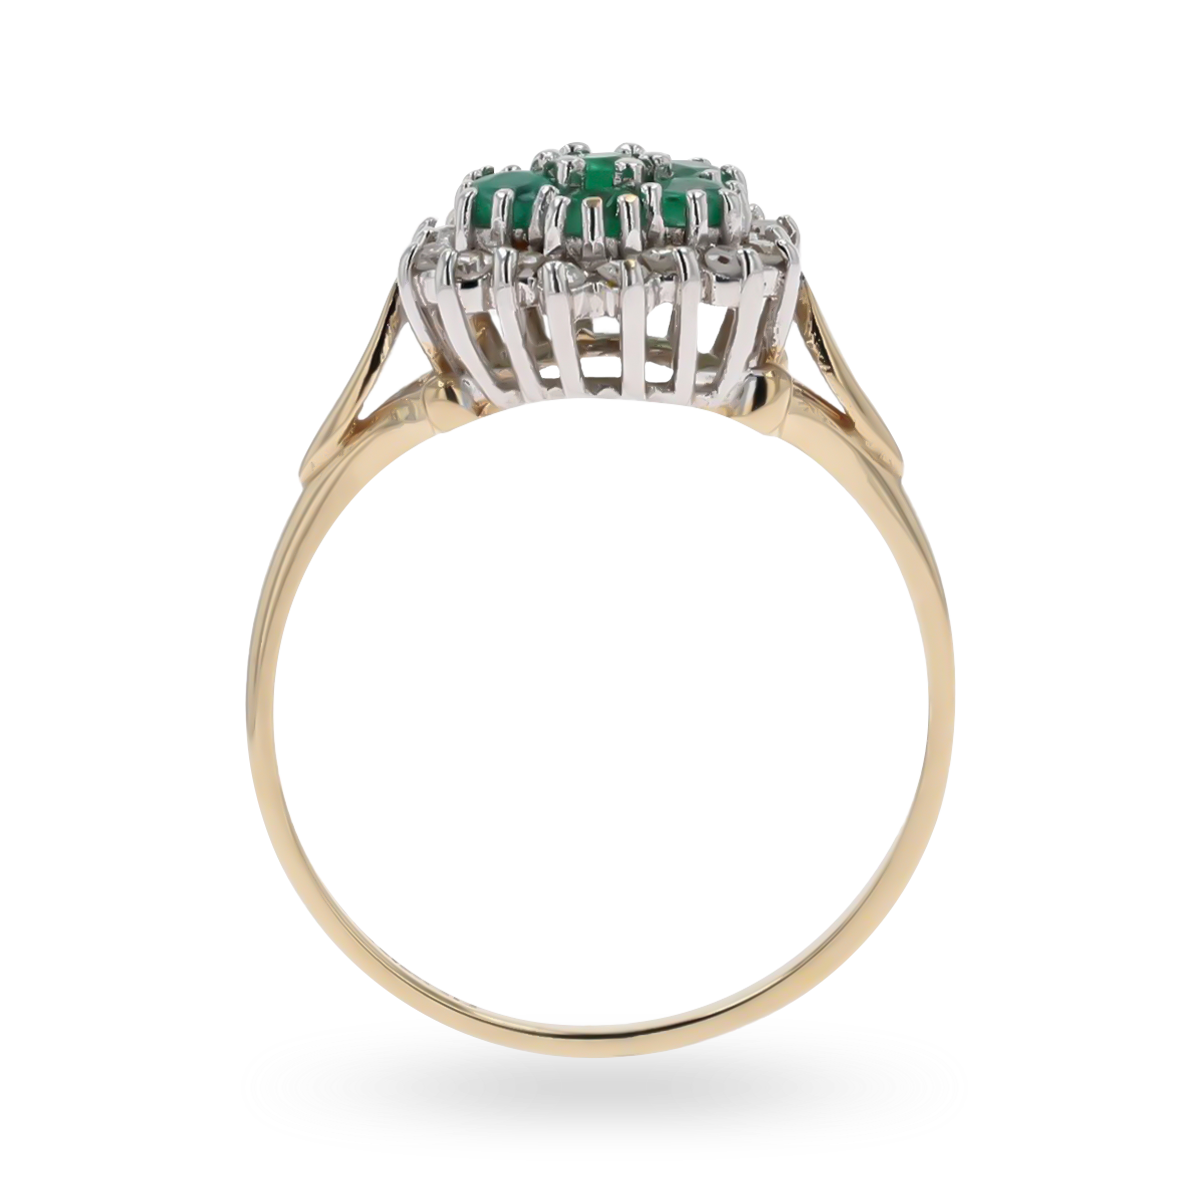 9ct Yellow Gold "Victoriana" Emerald & Diamond Cluster Ring